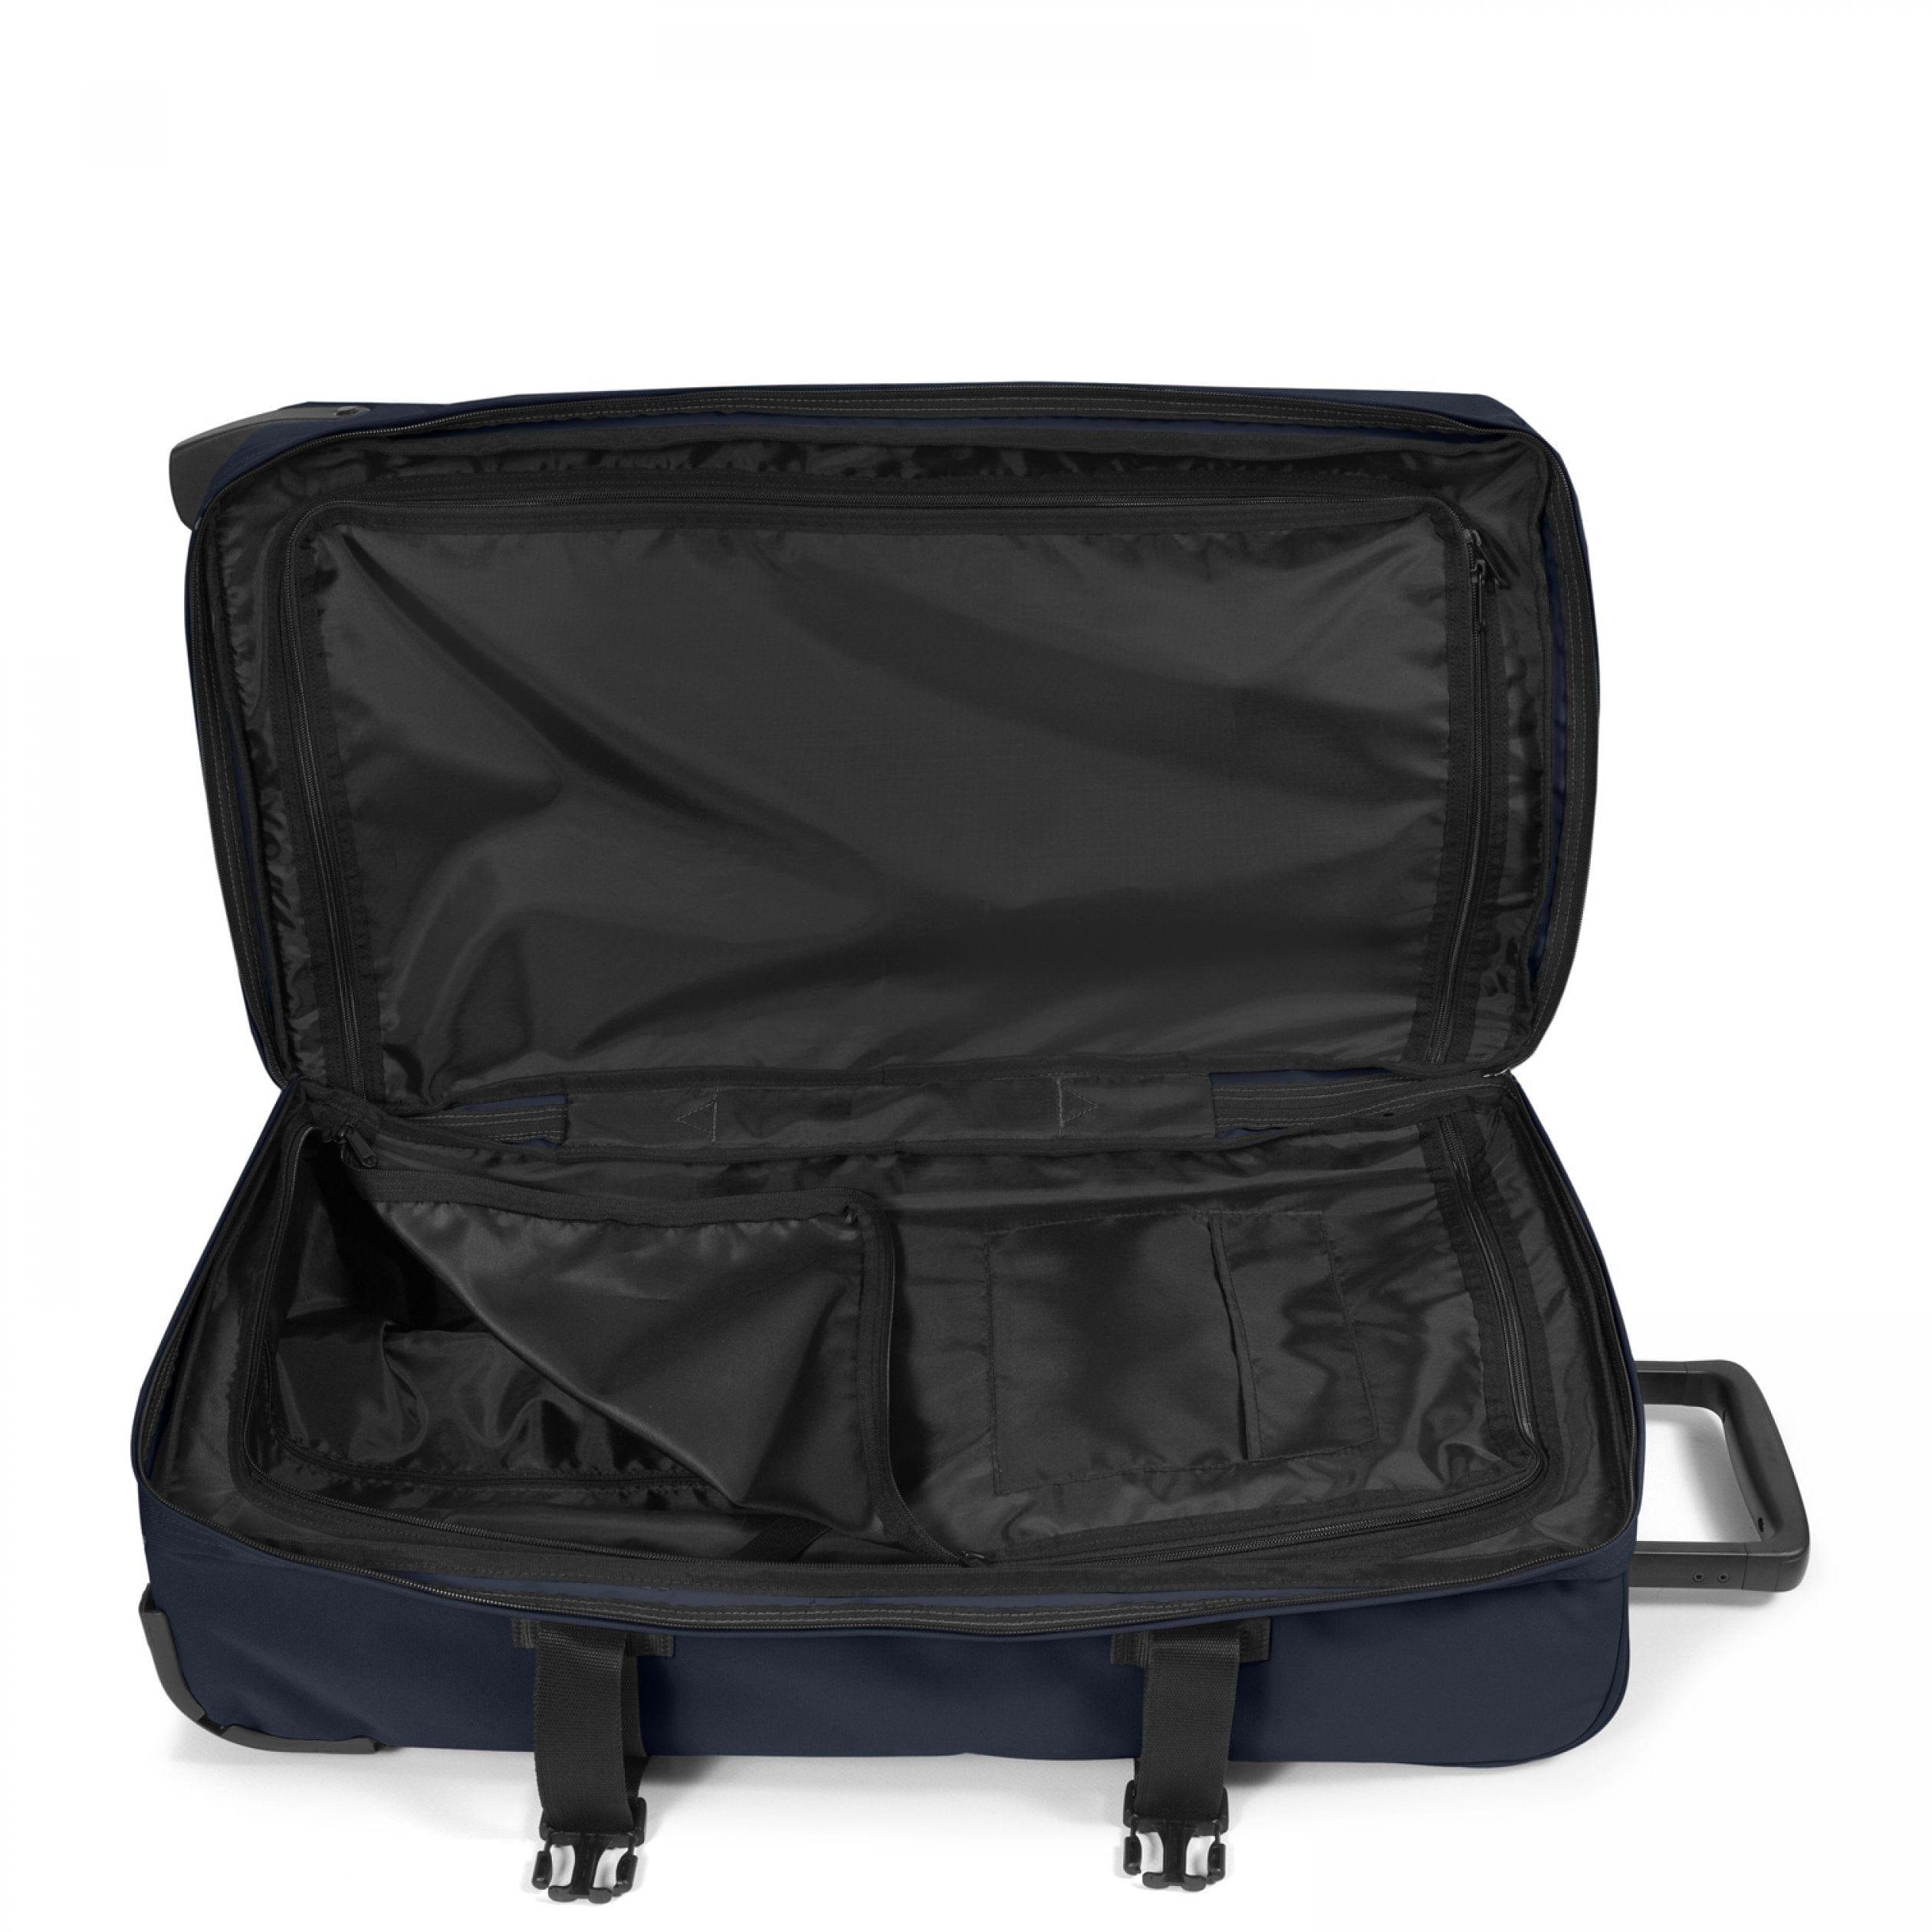 EASTPAK-Tranverz M-Medium Wheeled Luggage-Ultra Marine-EK00062LL83